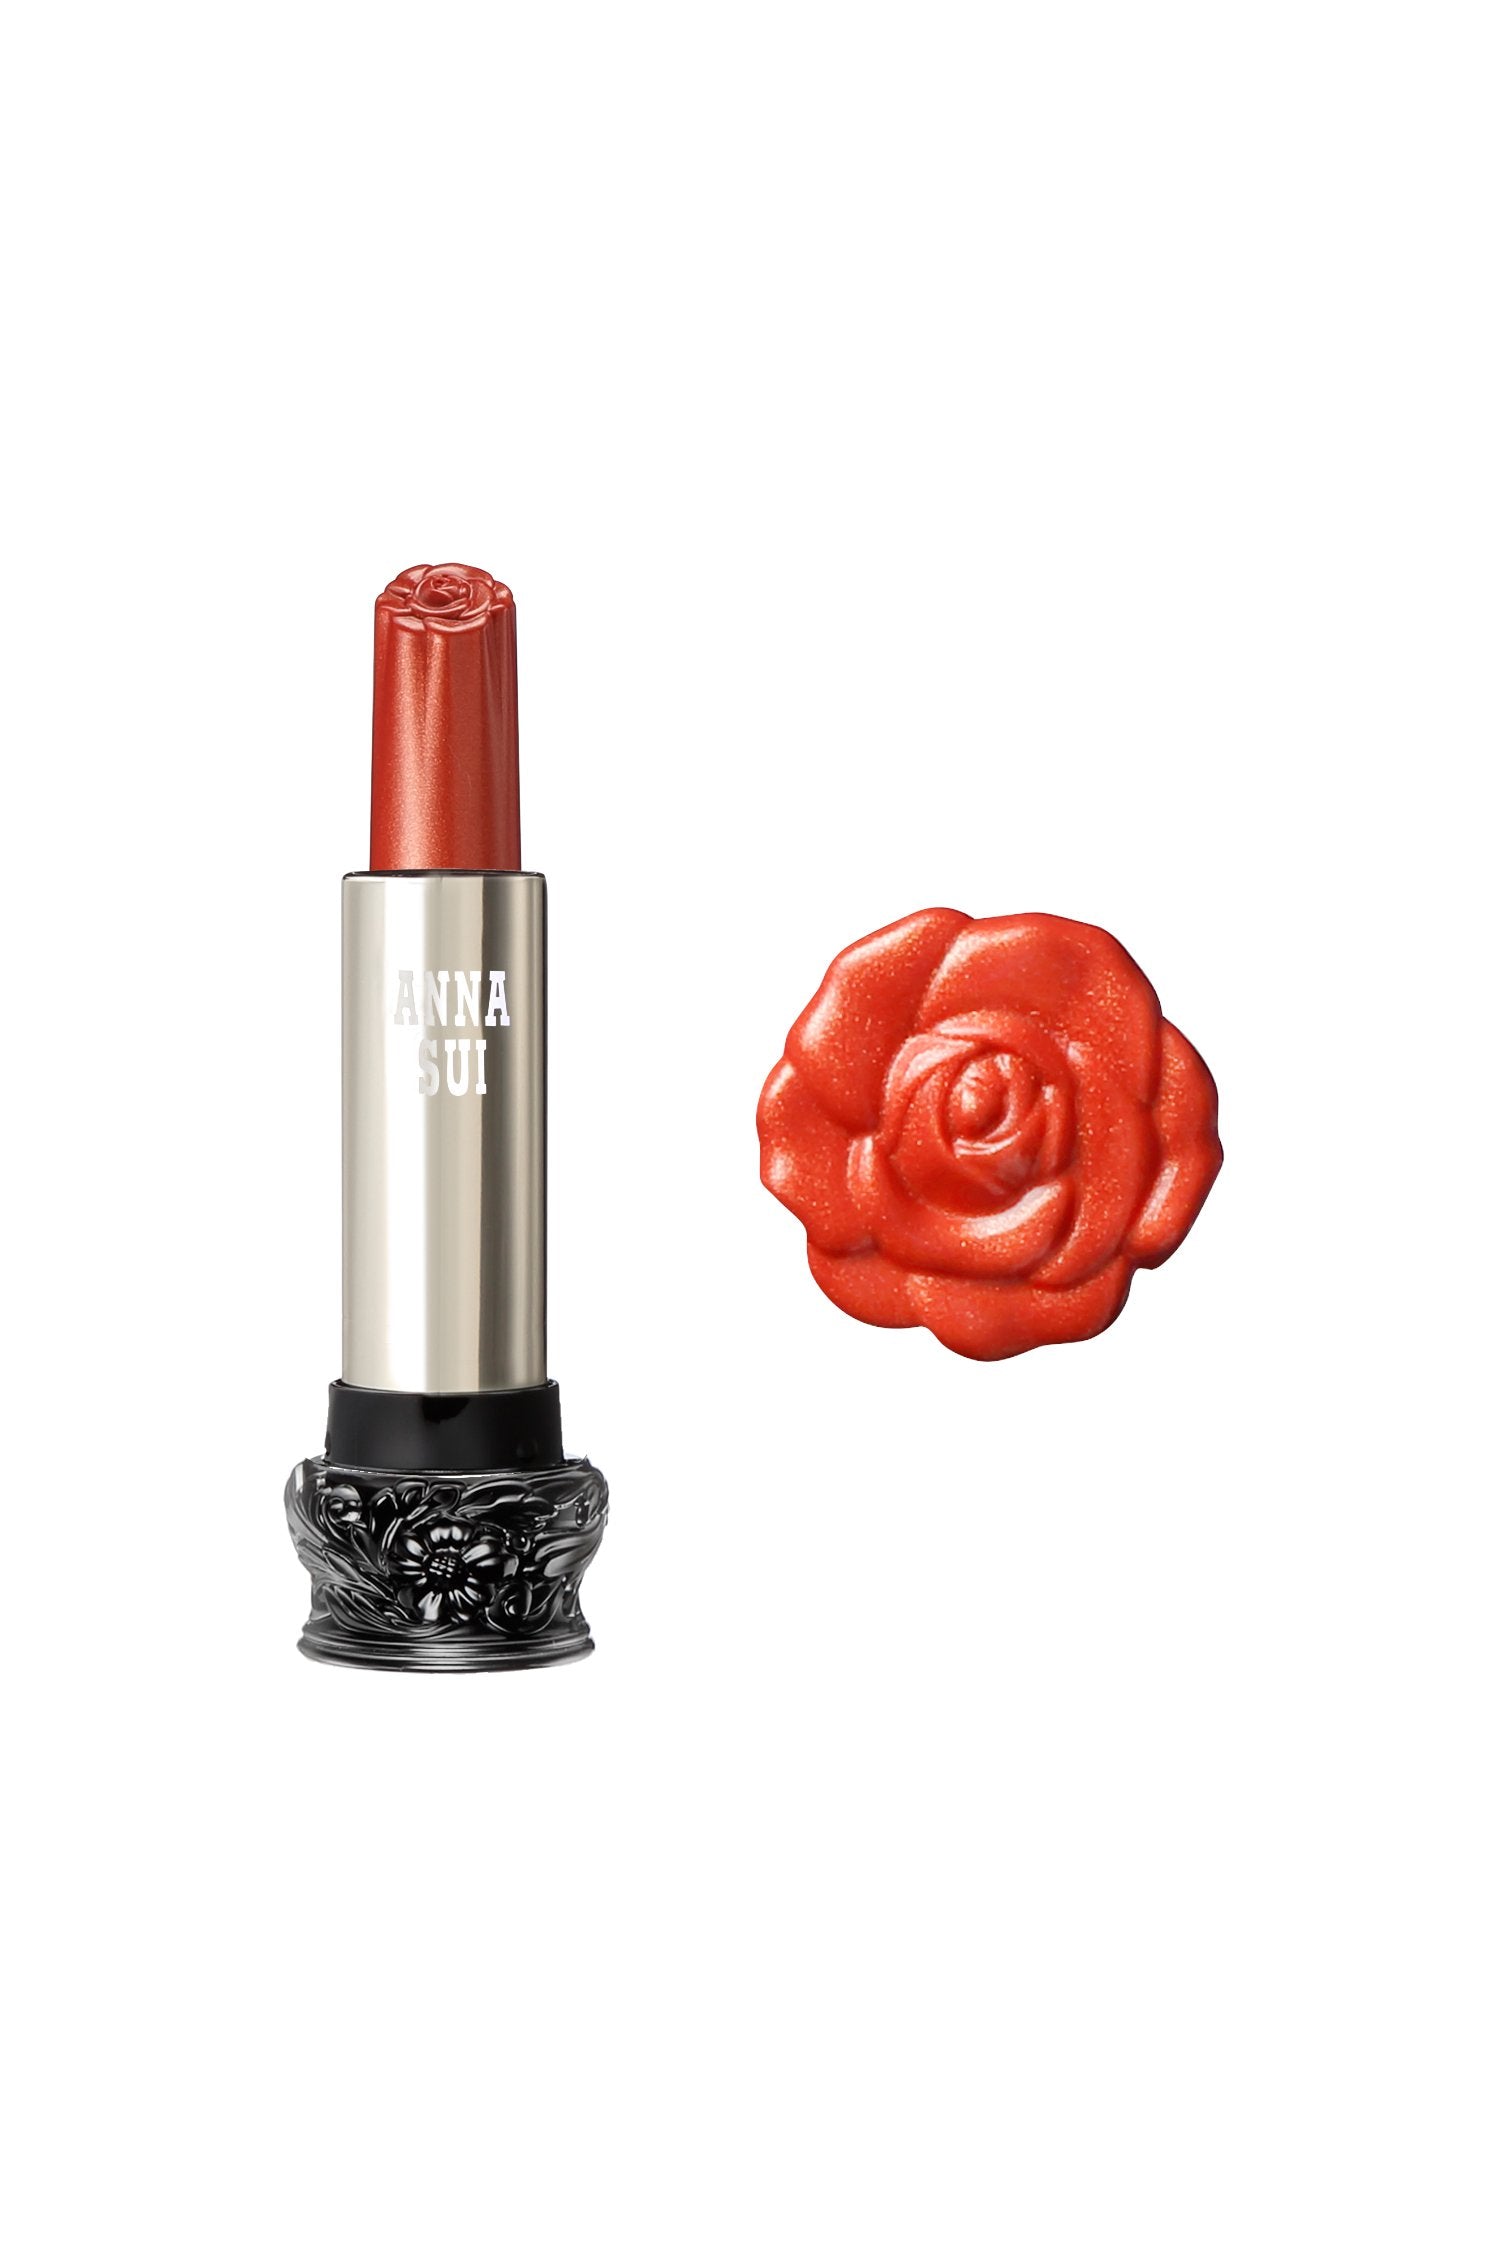 401-Orange Red Lily Lipstick S: Sheer Flower, cylindrical, large black base, engraved floral design, metallic body 